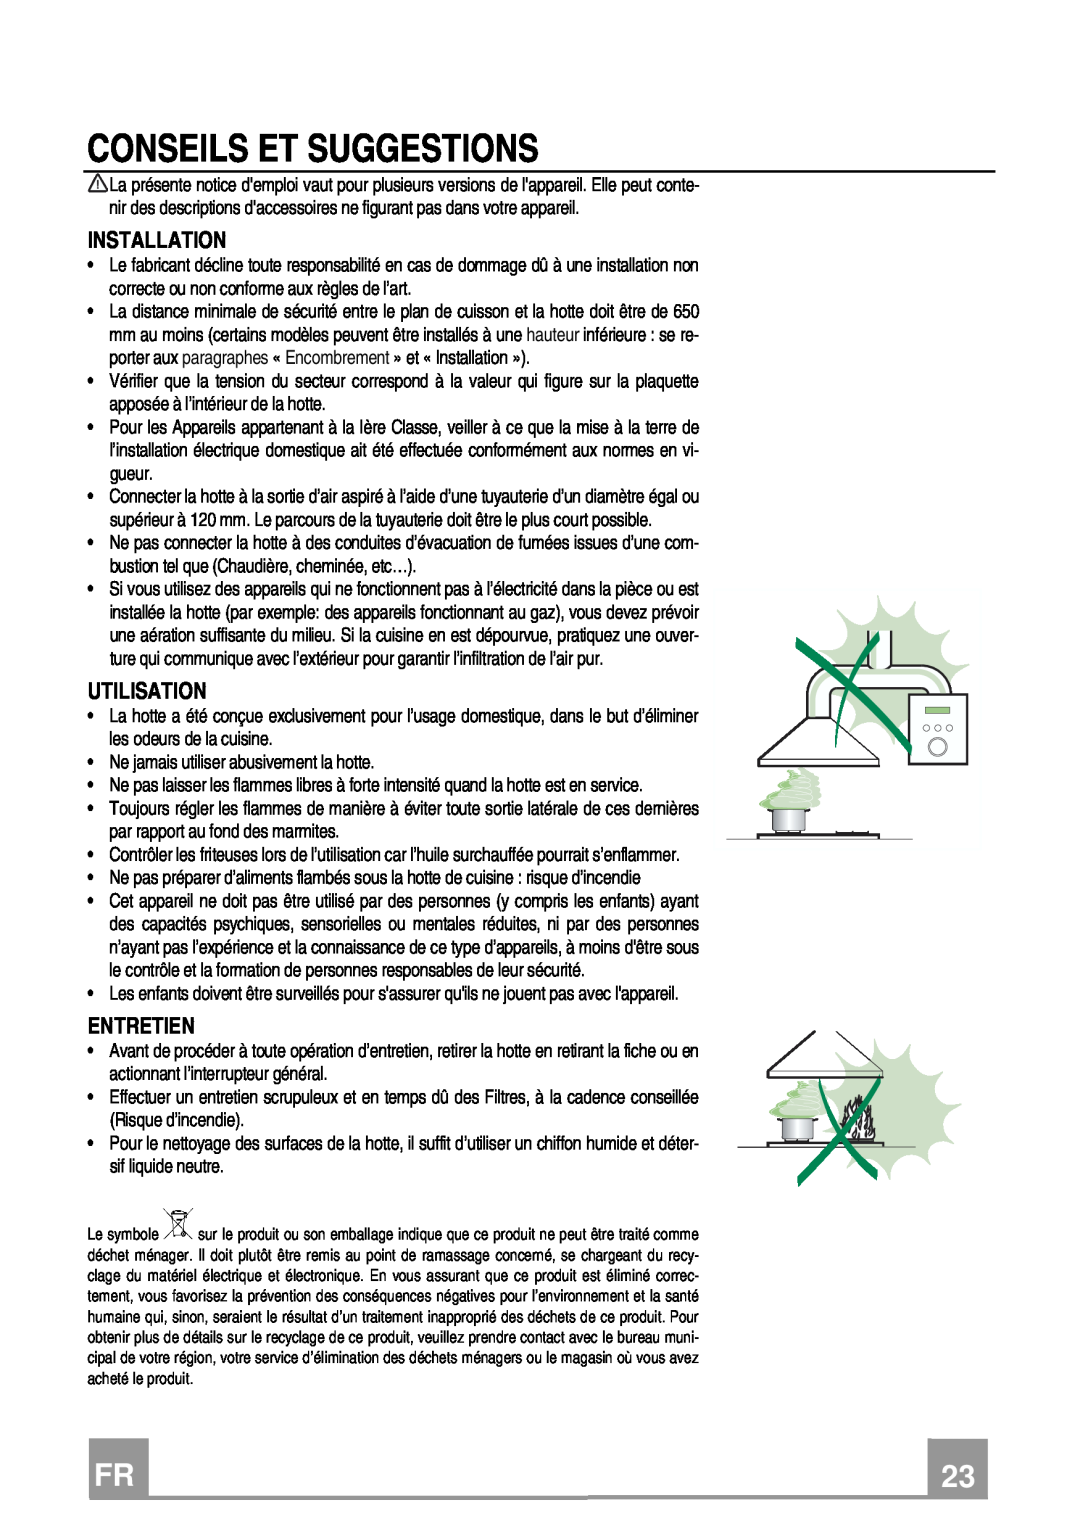 Franke Consumer Products FCR 708-H TC manual Conseils Et Suggestions, Utilisation, Entretien, Installation 